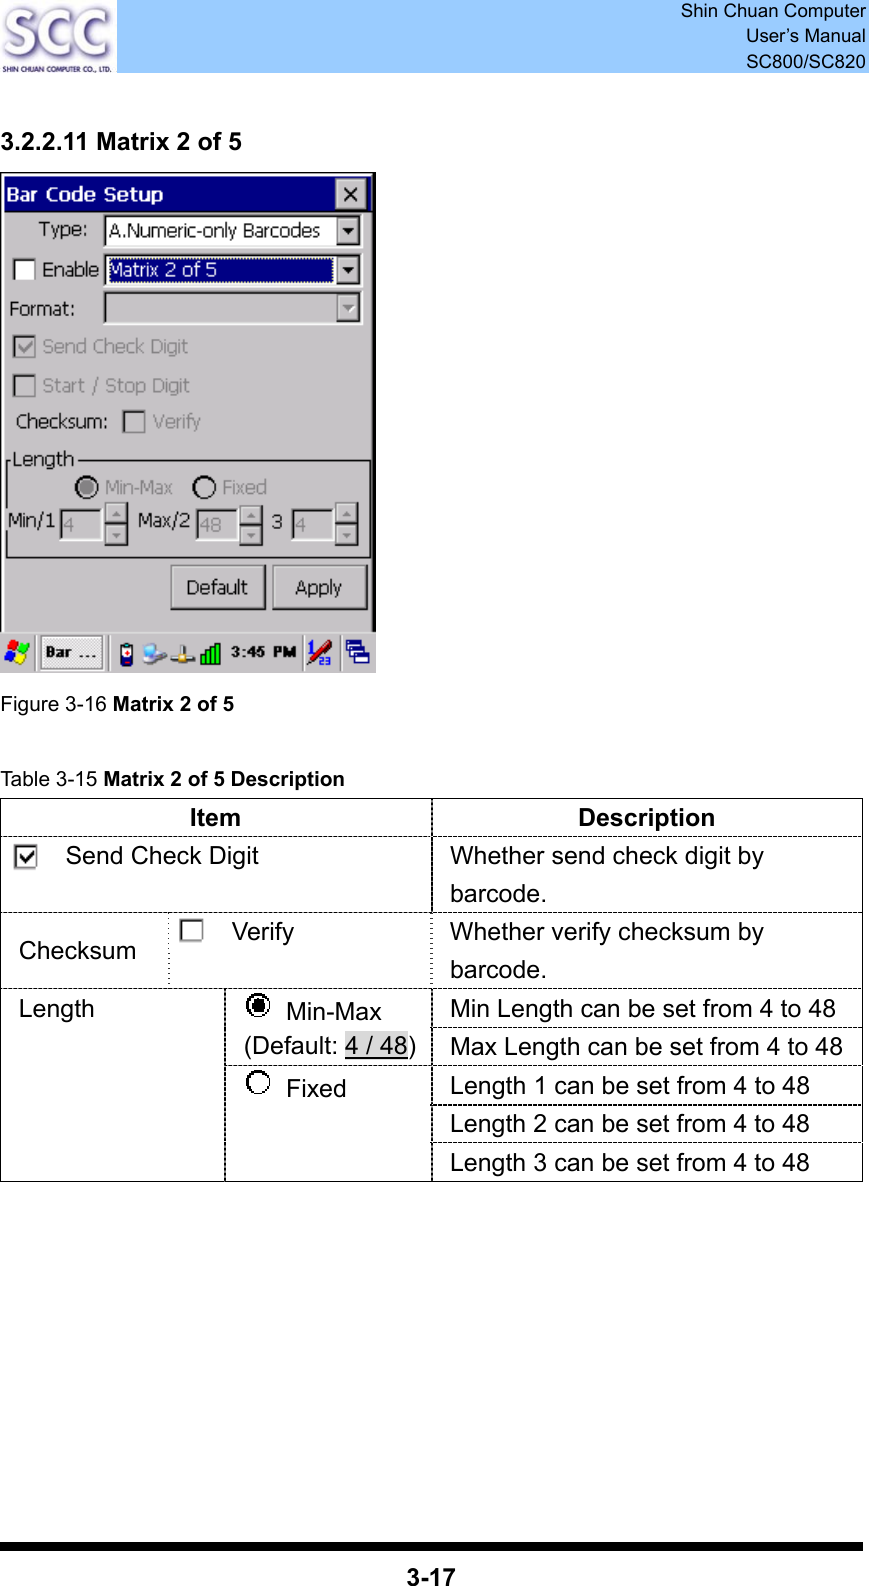  Shin Chuan Computer User’s Manual SC800/SC820  3-17  3.2.2.11 Matrix 2 of 5  Figure 3-16 Matrix 2 of 5  Table 3-15 Matrix 2 of 5 Description Item Description Send Check Digit  Whether send check digit by barcode. Checksum  Verify  Whether verify checksum by barcode. Min Length can be set from 4 to 48  Min-Max (Default: 4 / 48)Max Length can be set from 4 to 48 Length 1 can be set from 4 to 48 Length 2 can be set from 4 to 48 Length  Fixed Length 3 can be set from 4 to 48         